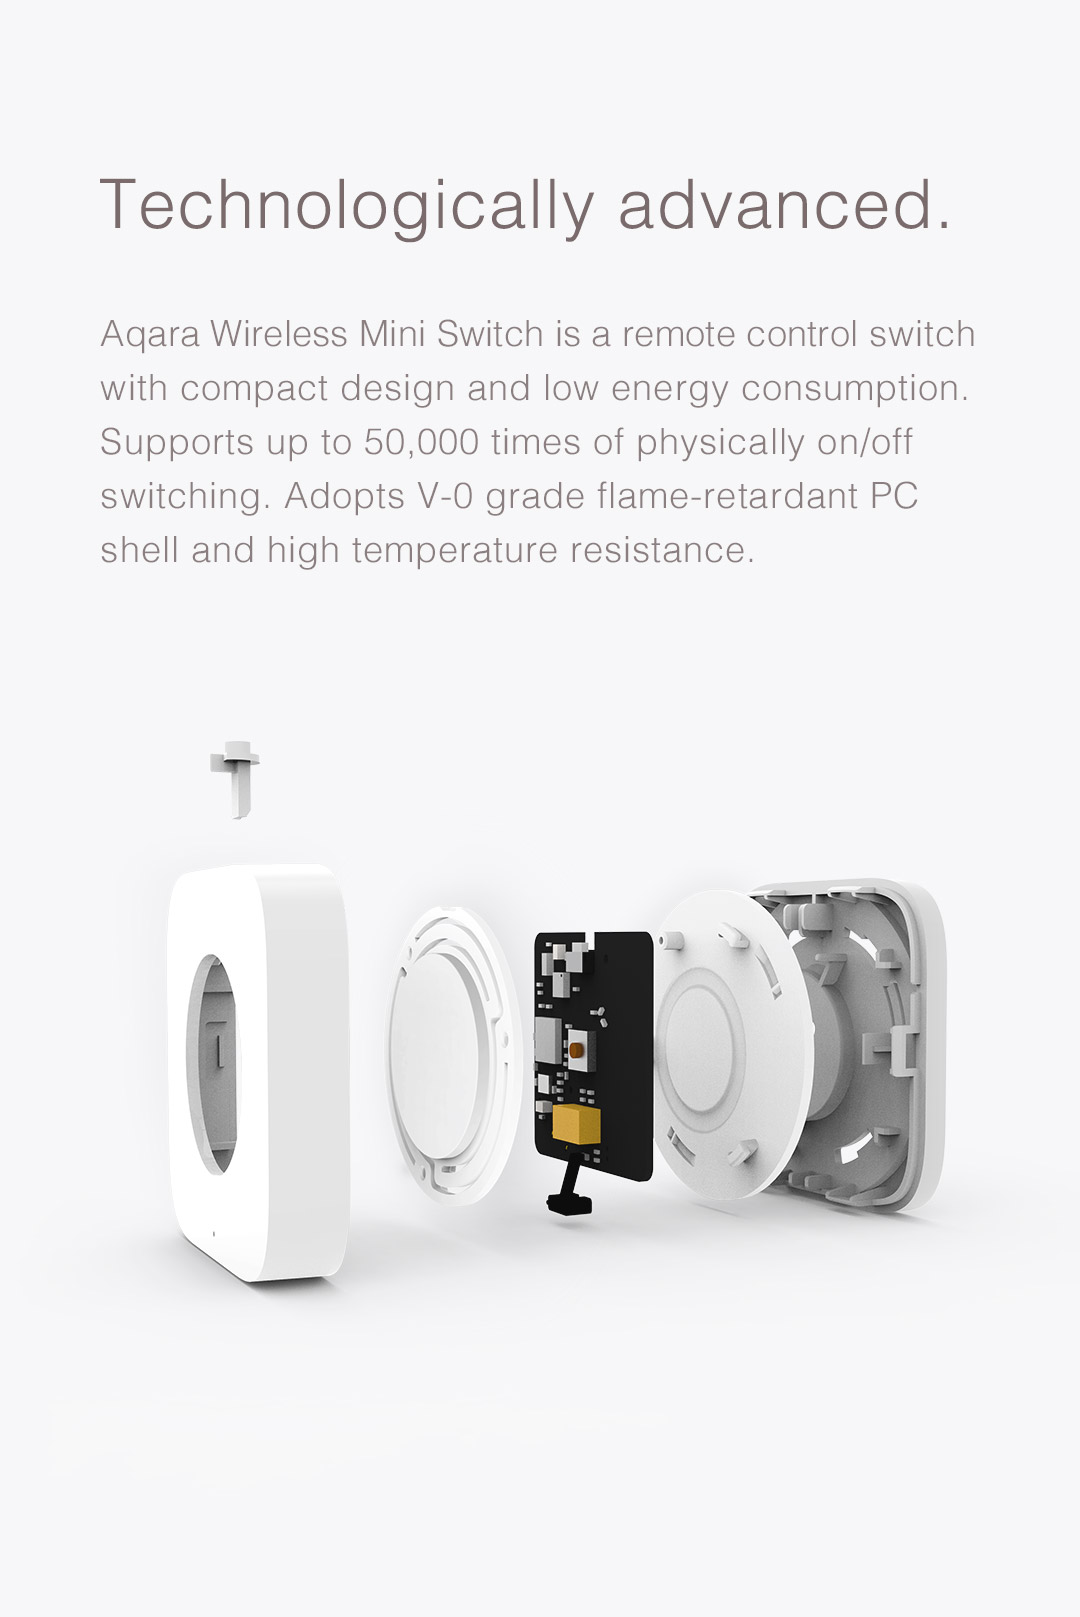 4 x Xiaomi Aqara Smart Wireless Switch Mini House Remote Controller By Home APP